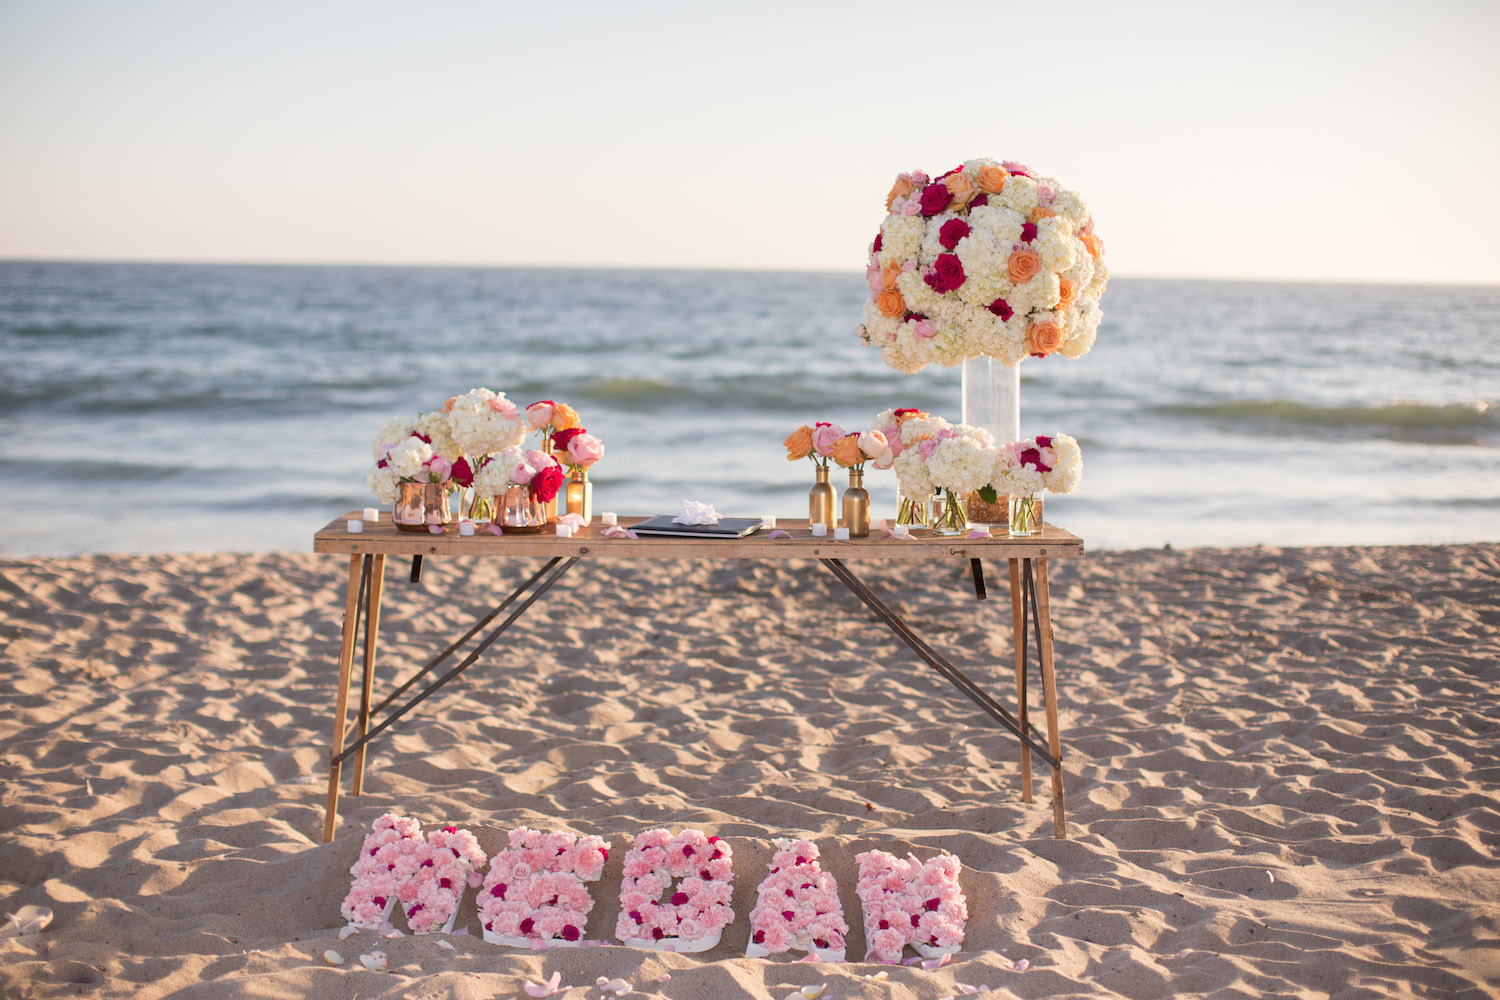 Most Romantic Los Angeles Beach Proposal | The Heart Bandits Blog1500 x 1000